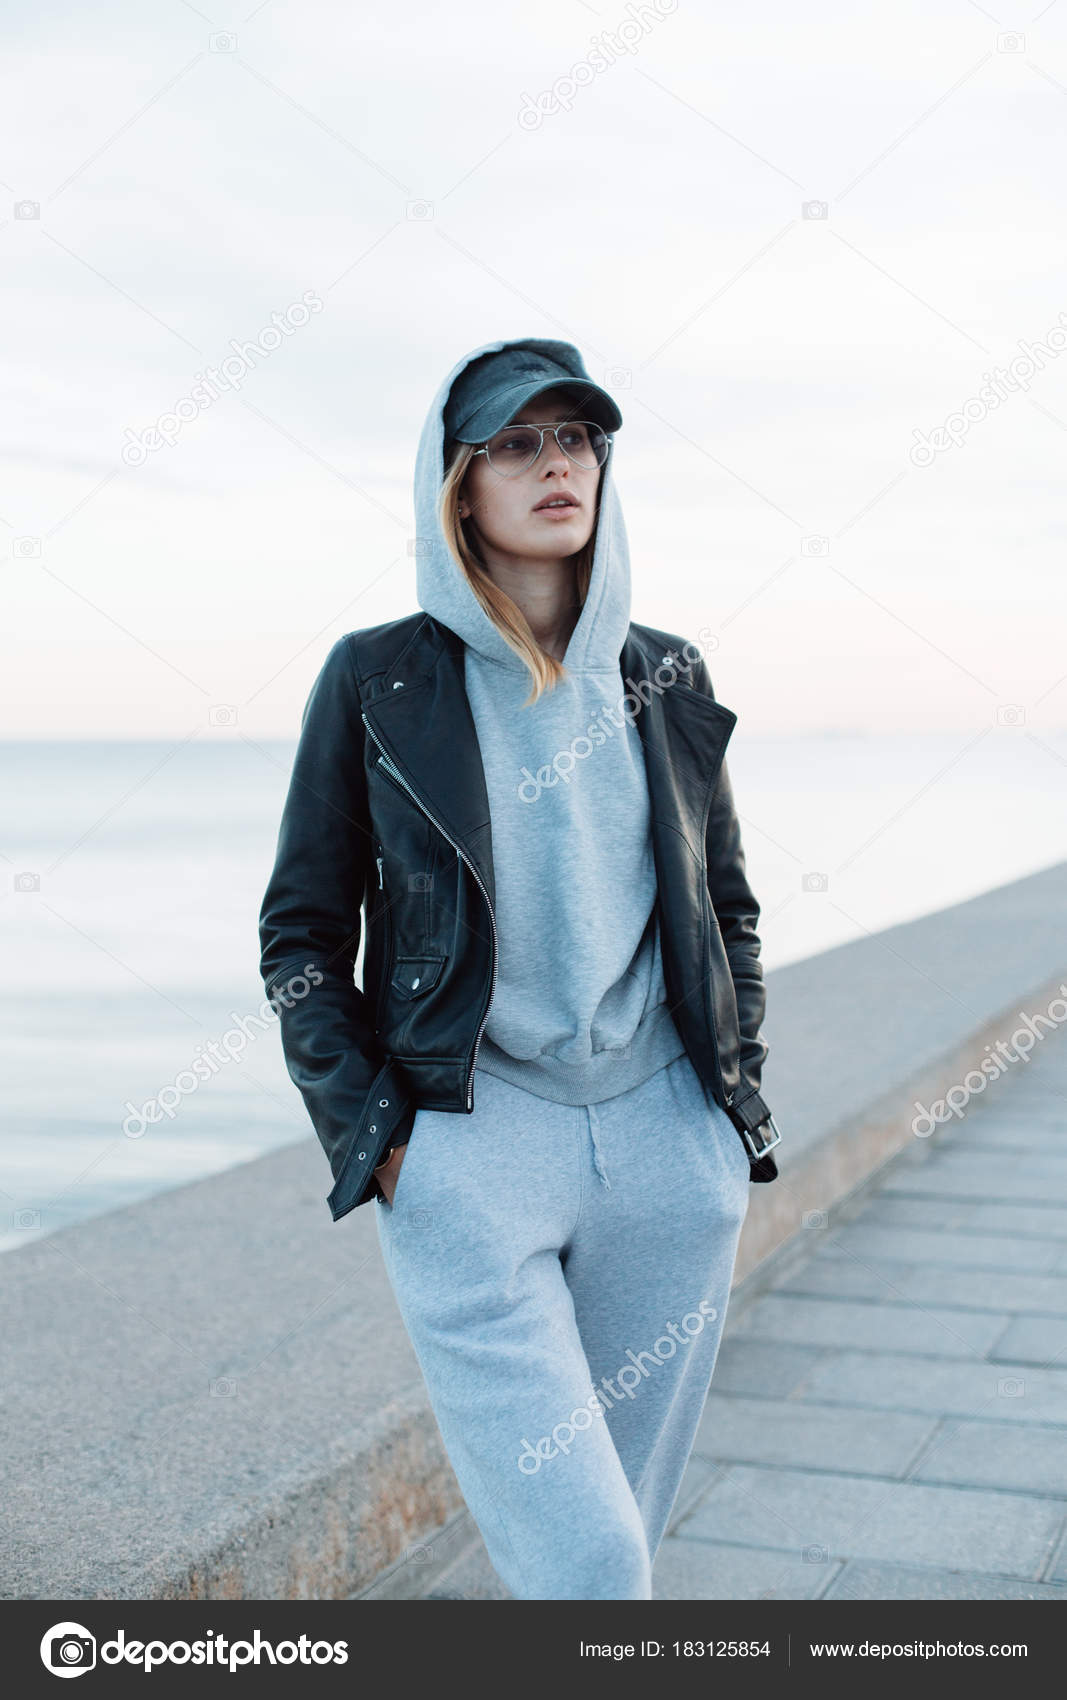 https://st3.depositphotos.com/5745954/18312/i/1600/depositphotos_183125854-stock-photo-portrait-young-woman-grey-hoodie.jpg